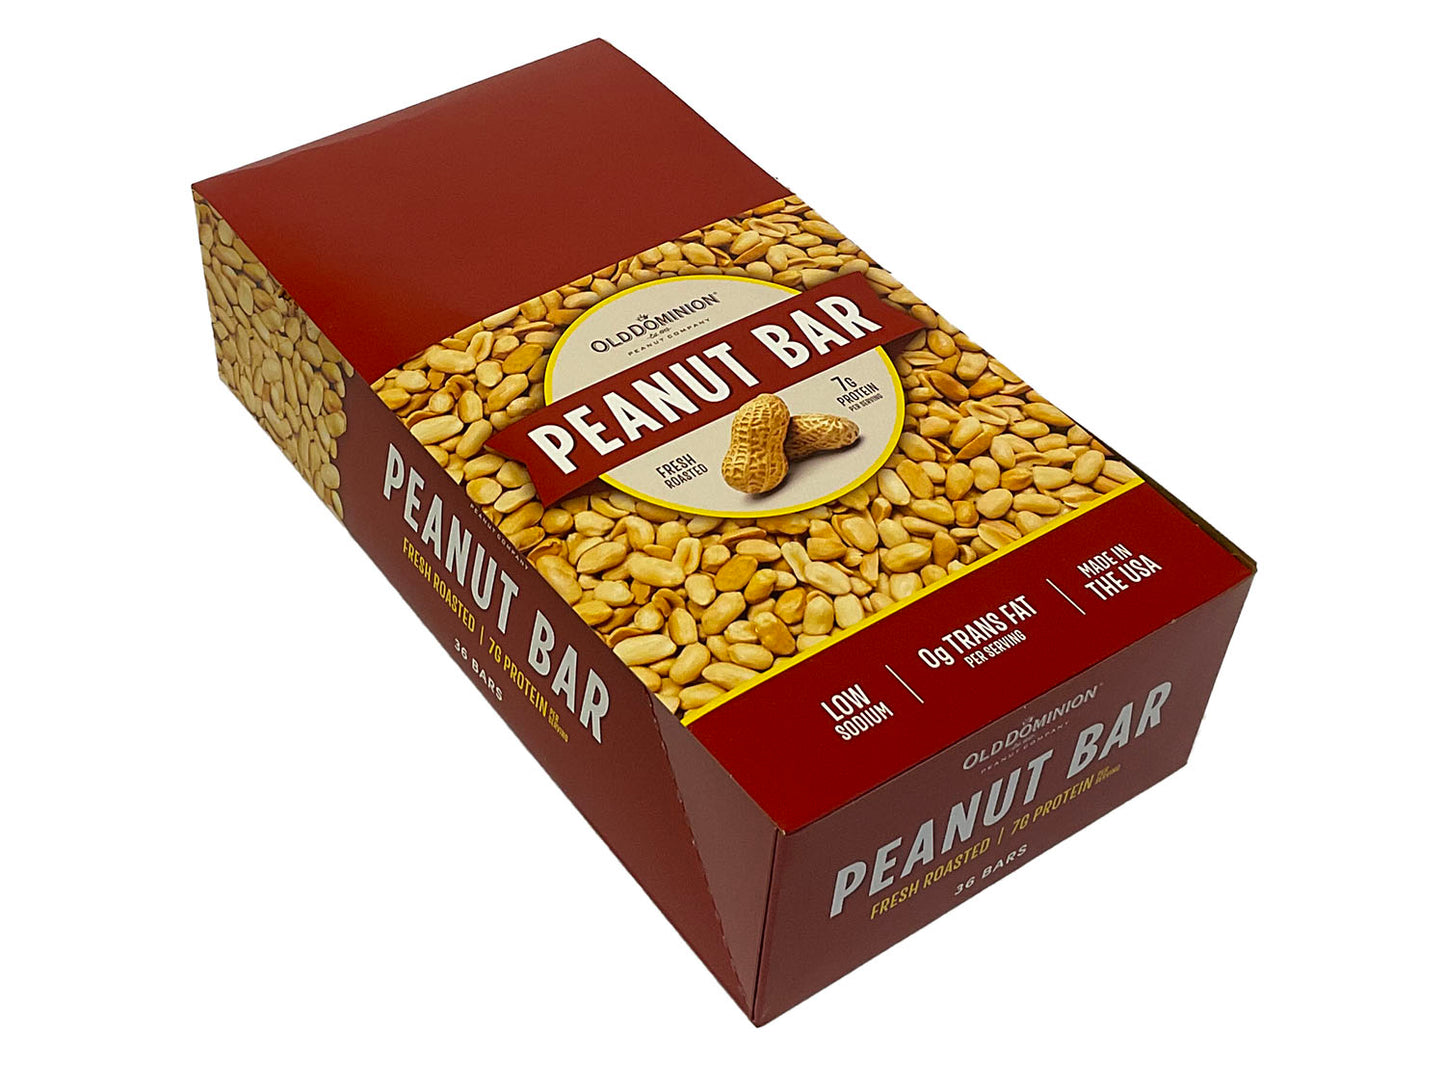 Peanut Bars by Old Dominion - 1.65 oz bar - box of 36